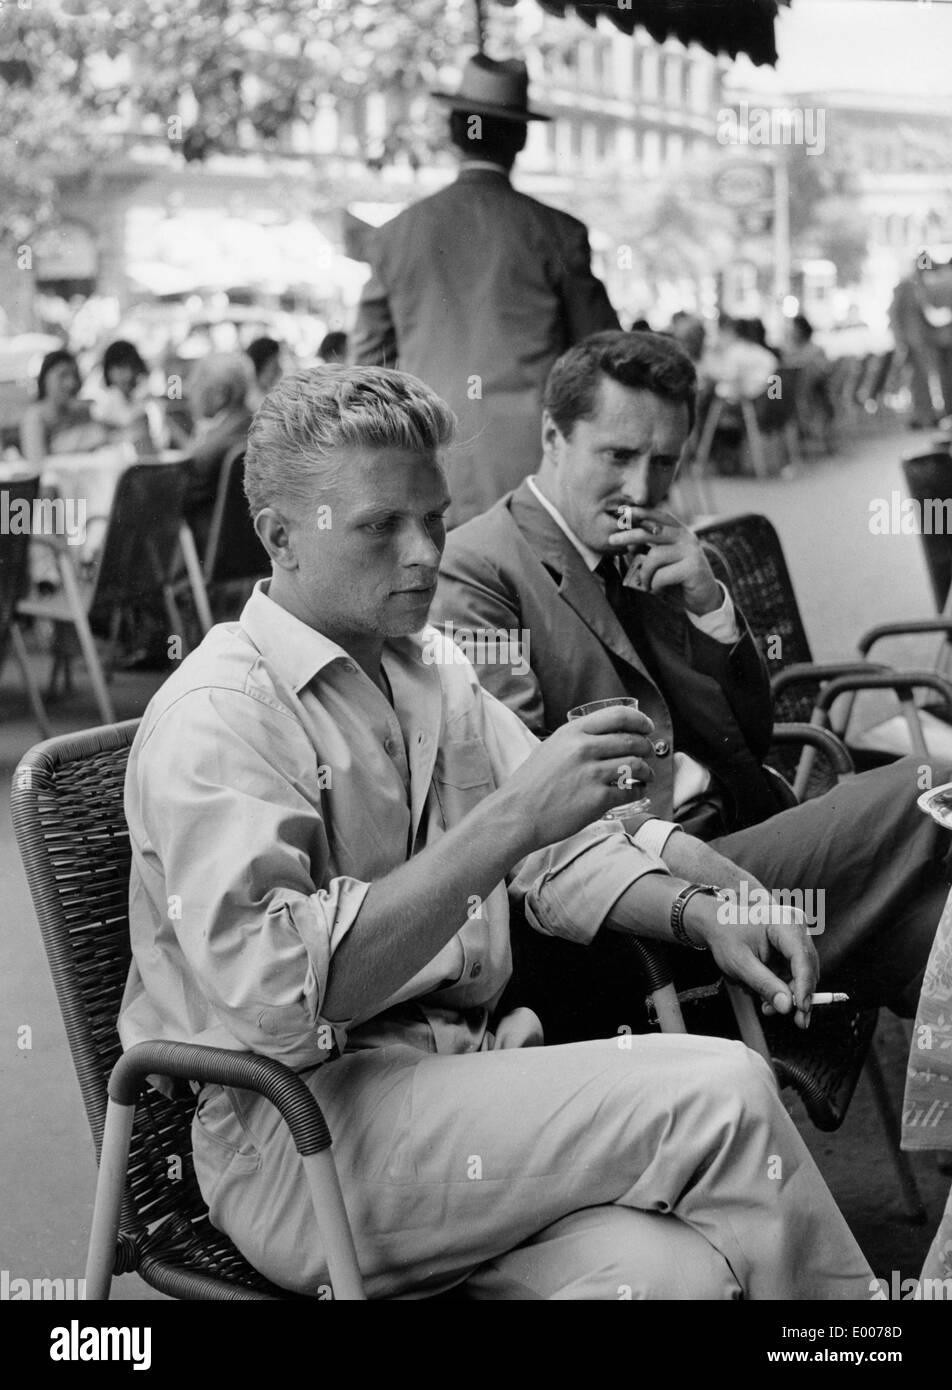 Pietro Germi and Hardy Krueger, 1956 Stock Photo